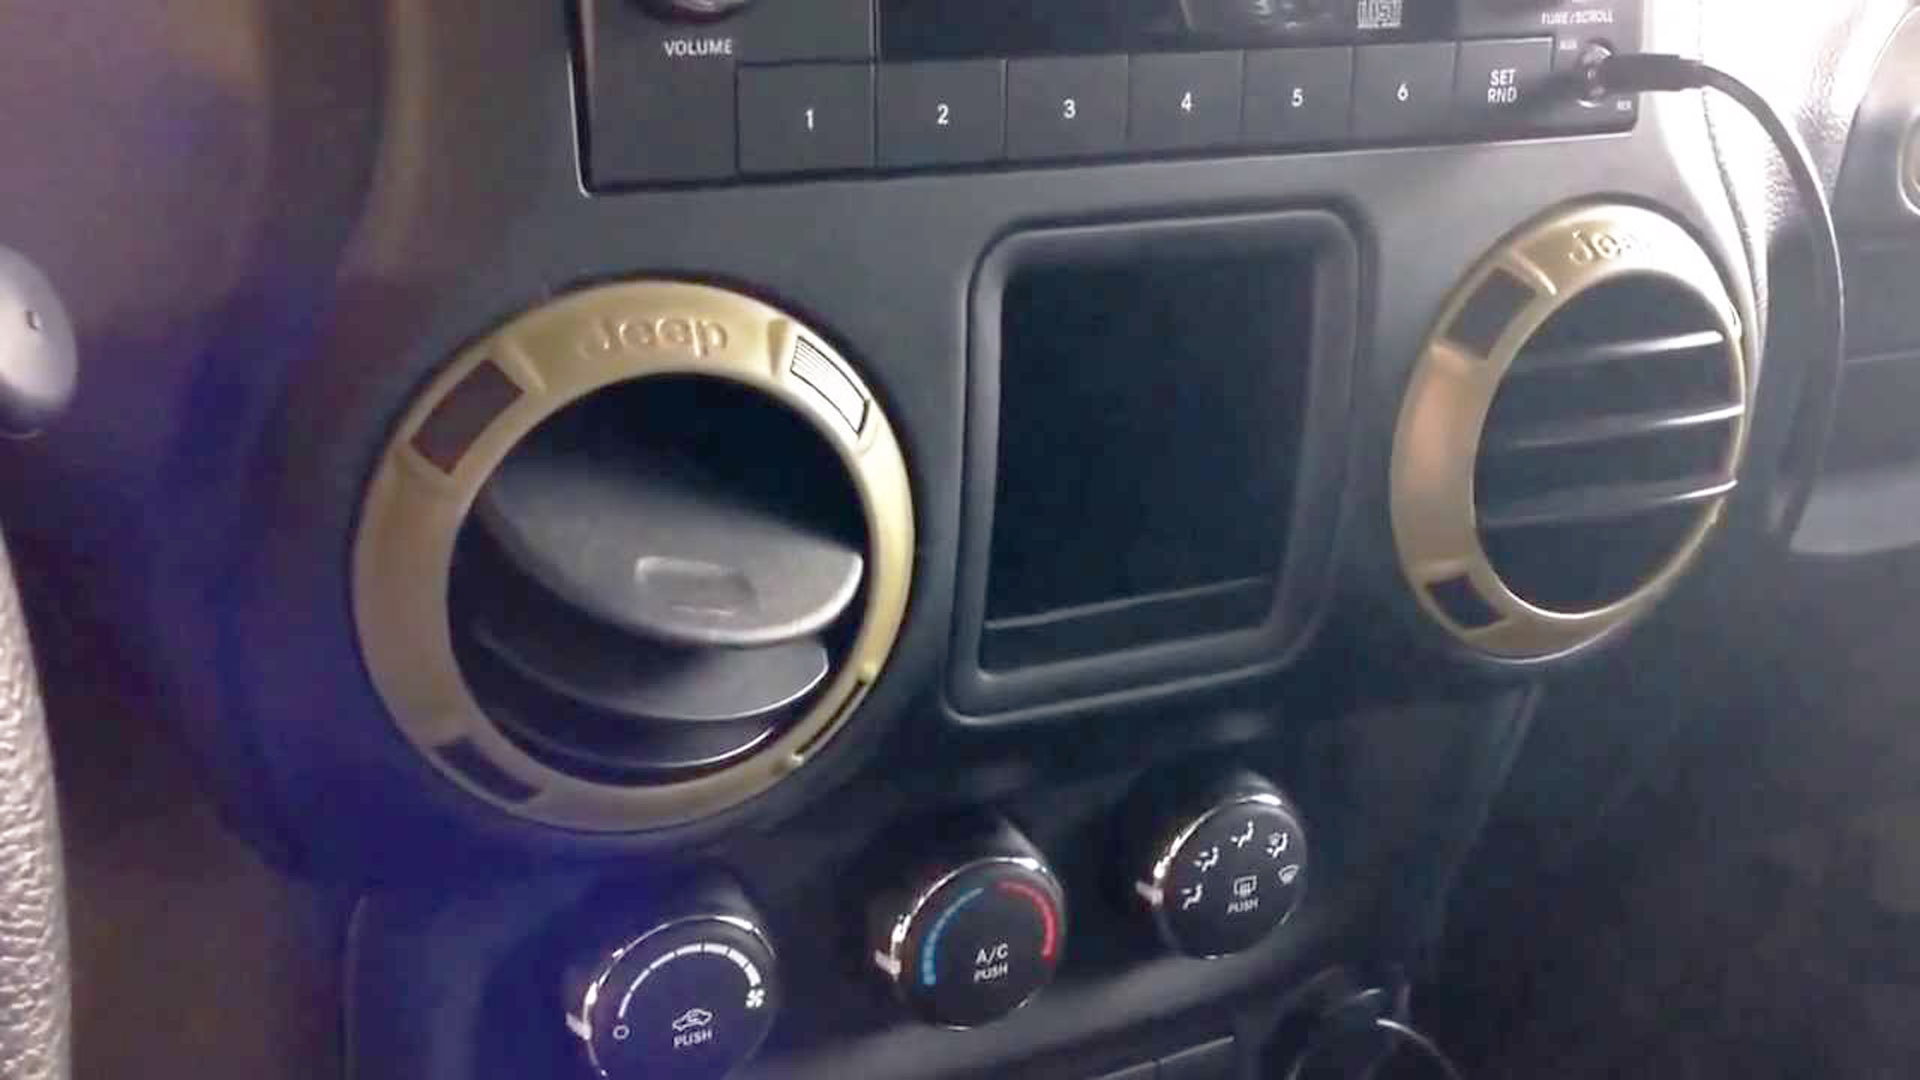 Jeep Wrangler JK: How to Modify Air Conditioning | Jk-forum